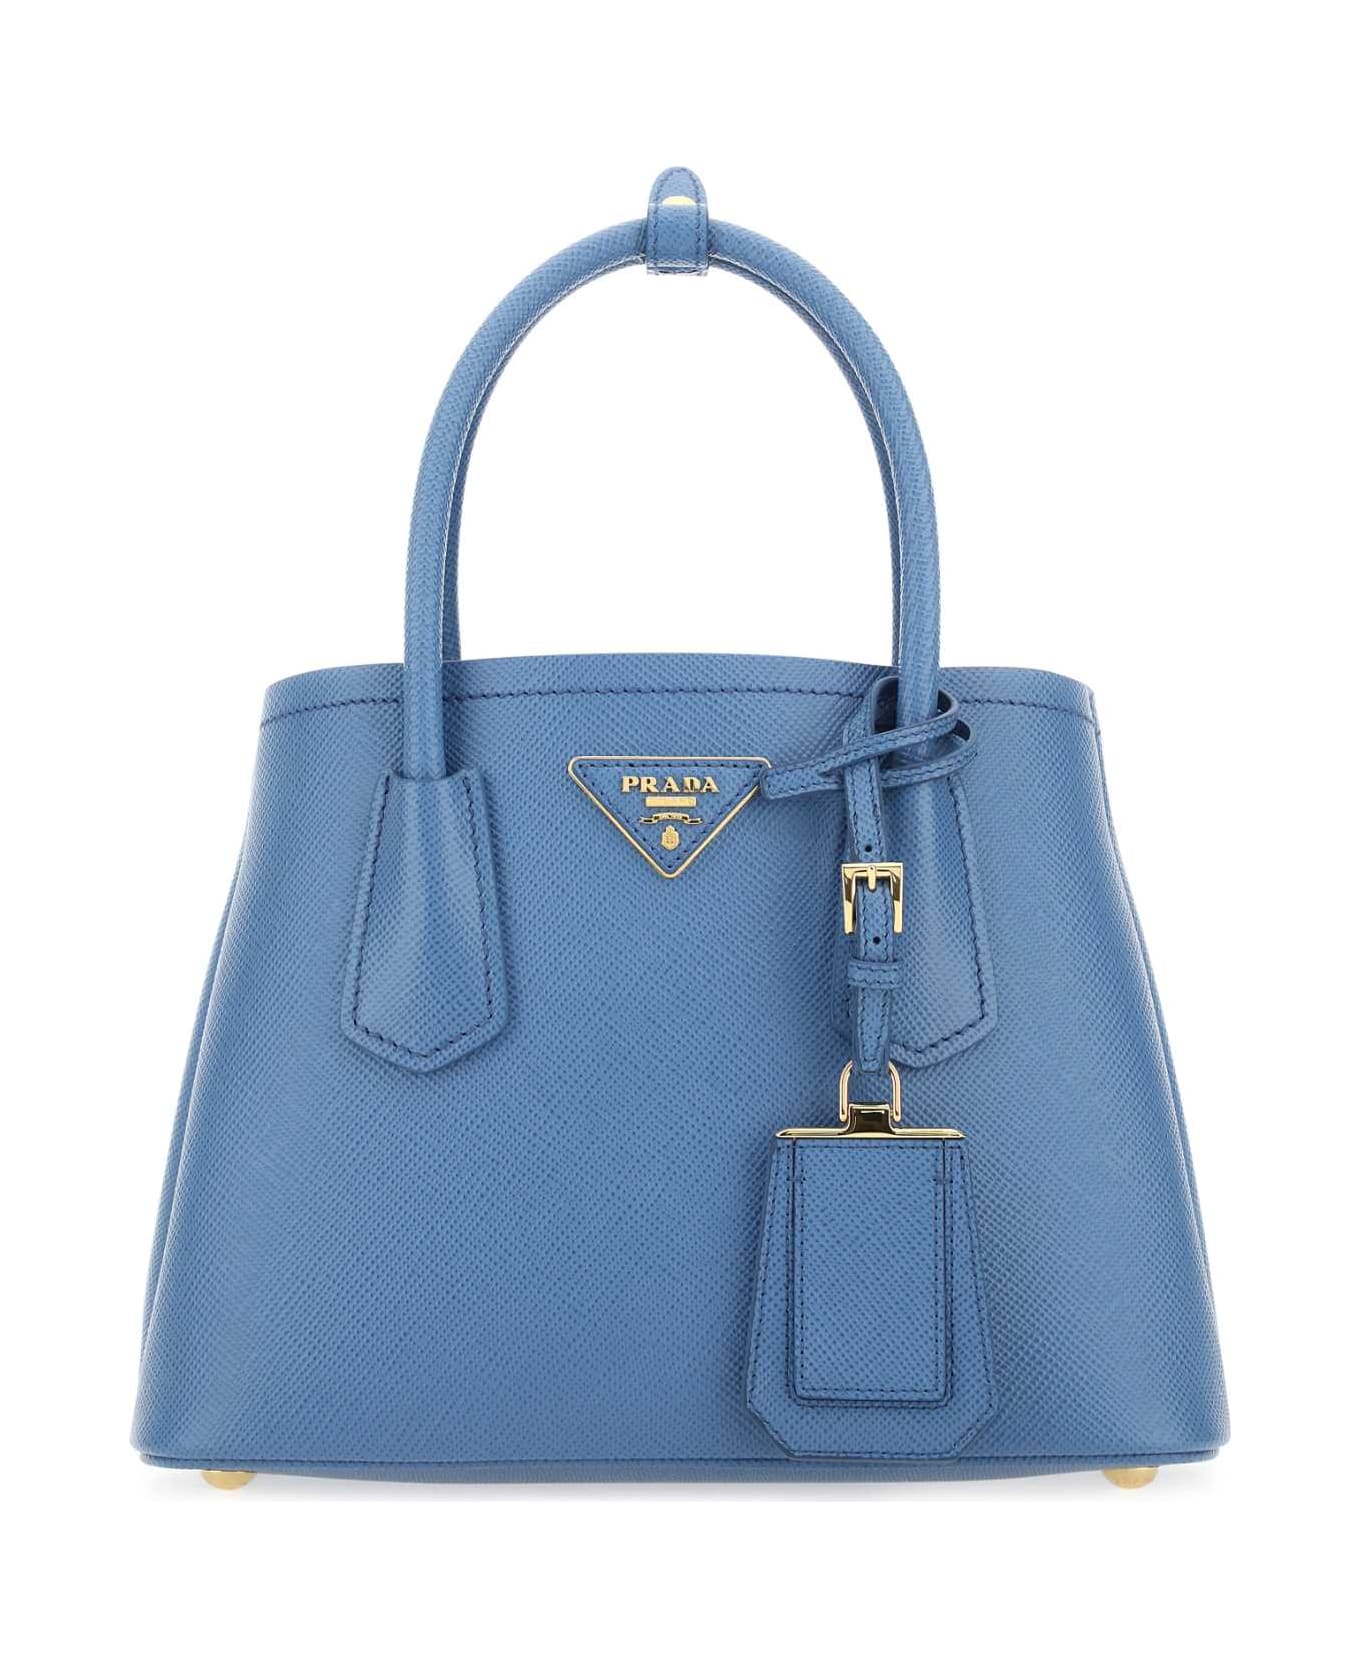 Prada Cerulean Blue Leather Handbag - Blue トートバッグ